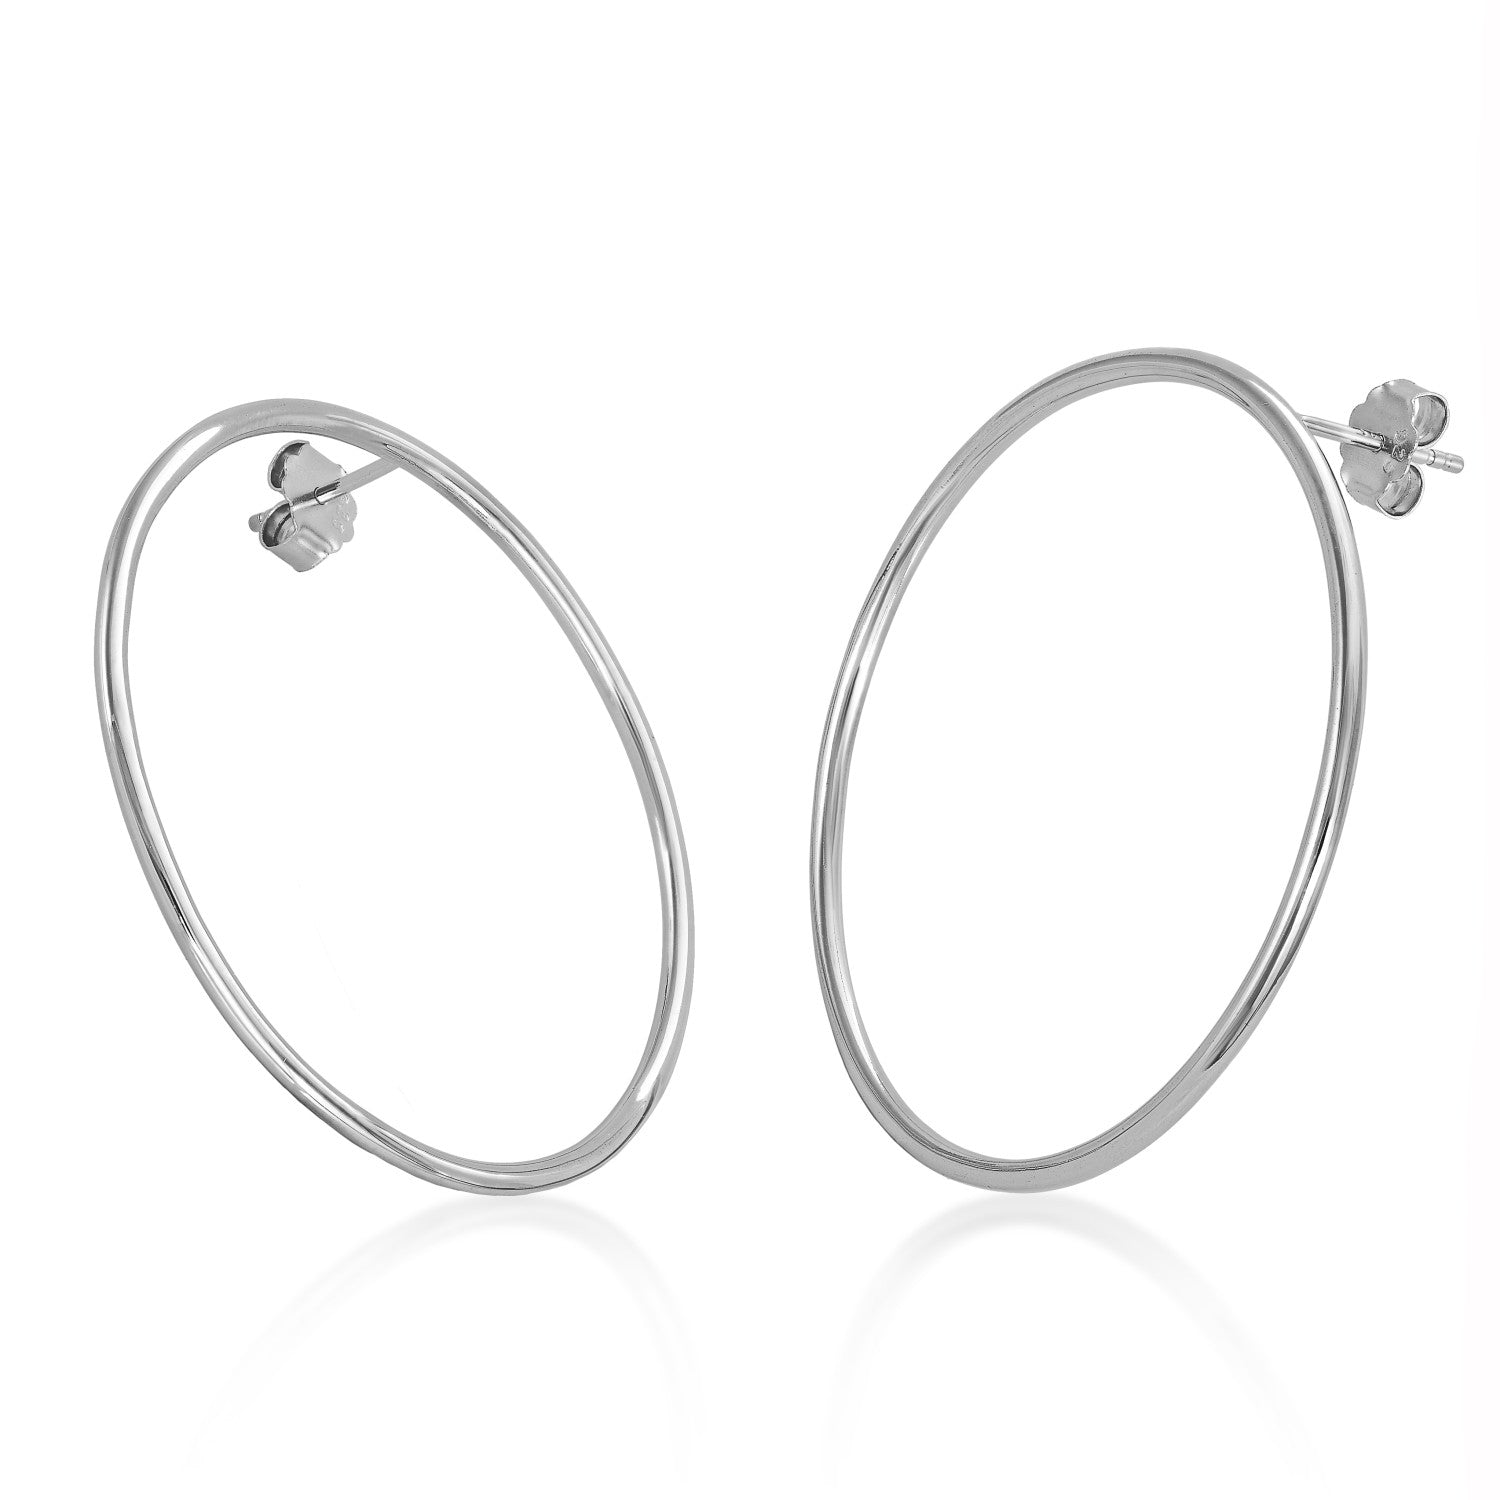 Silver hoop earrings maxi circle design